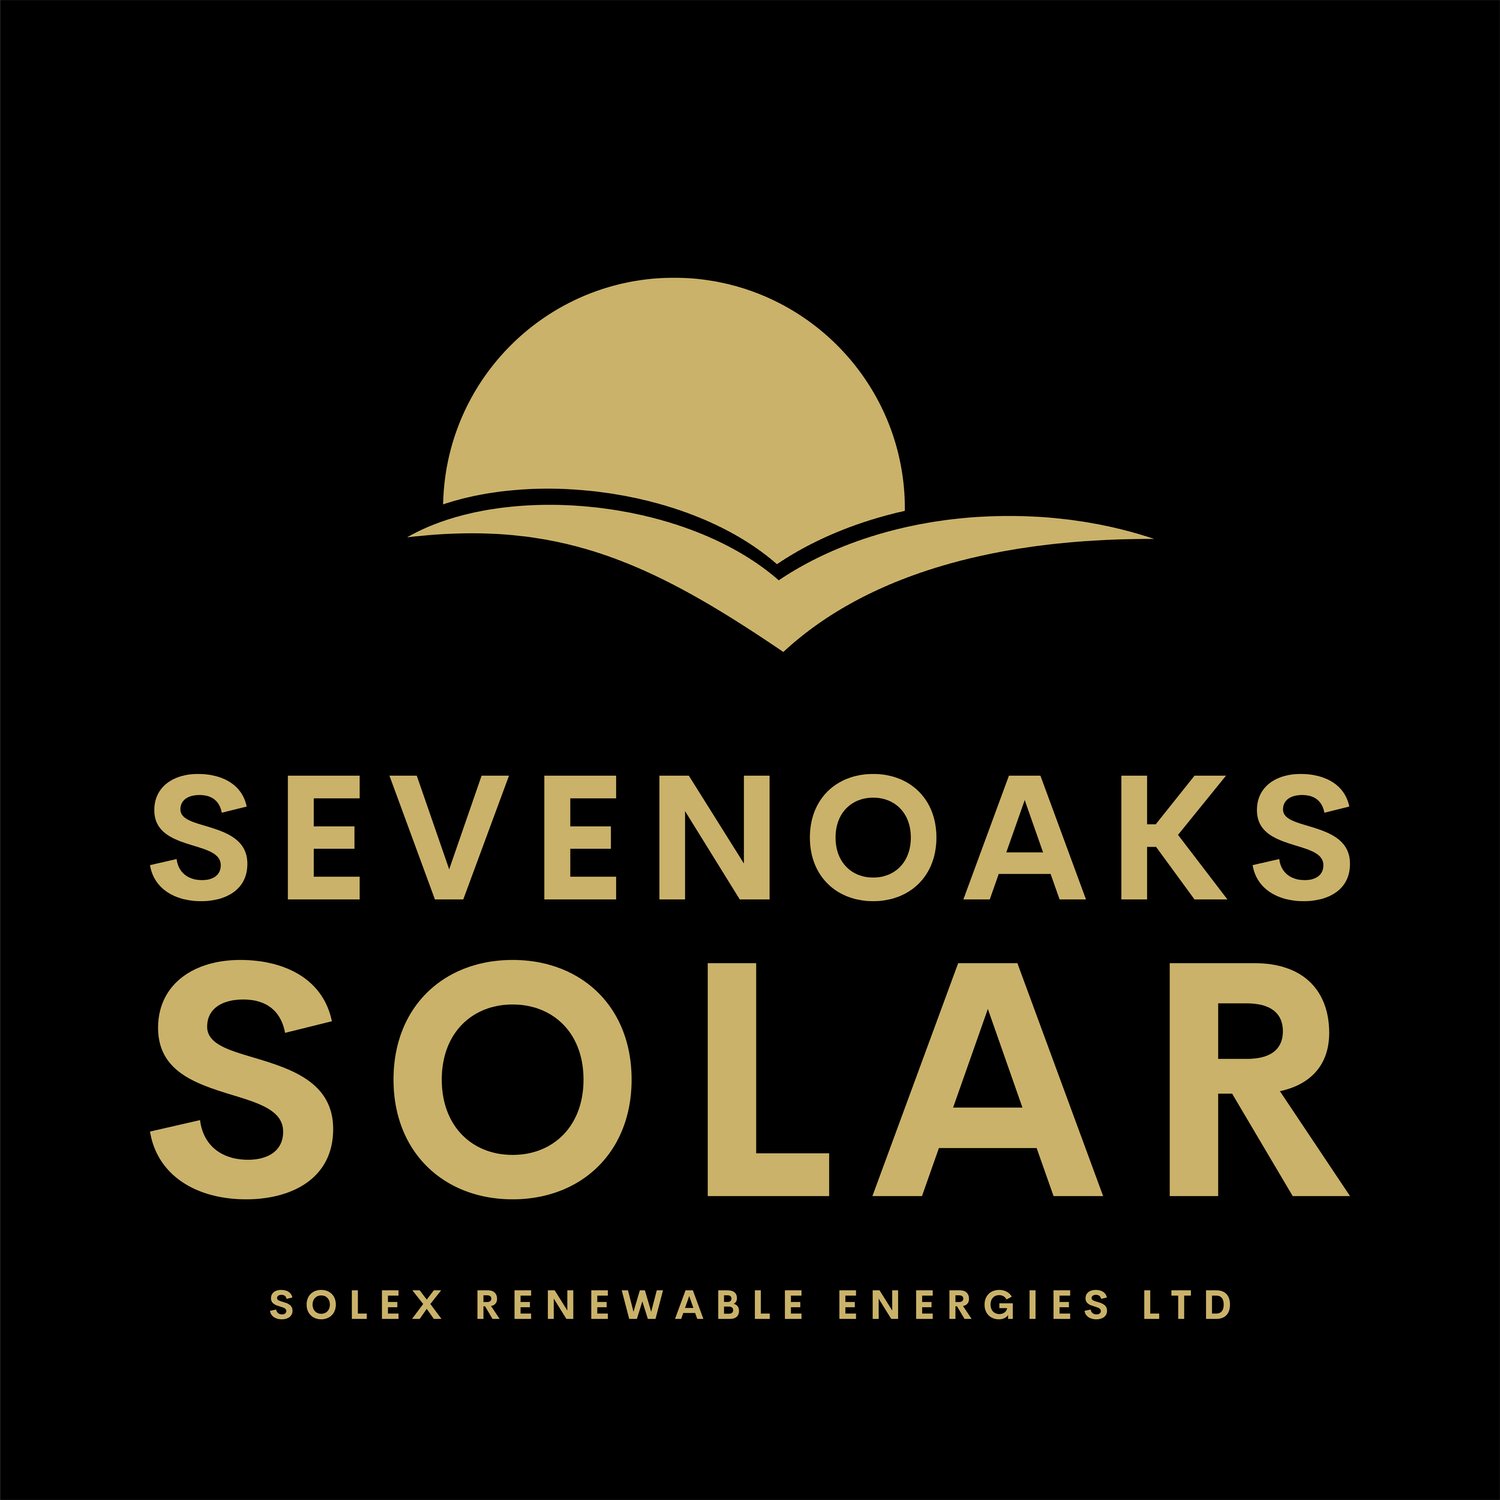 Sevenoaks Solar